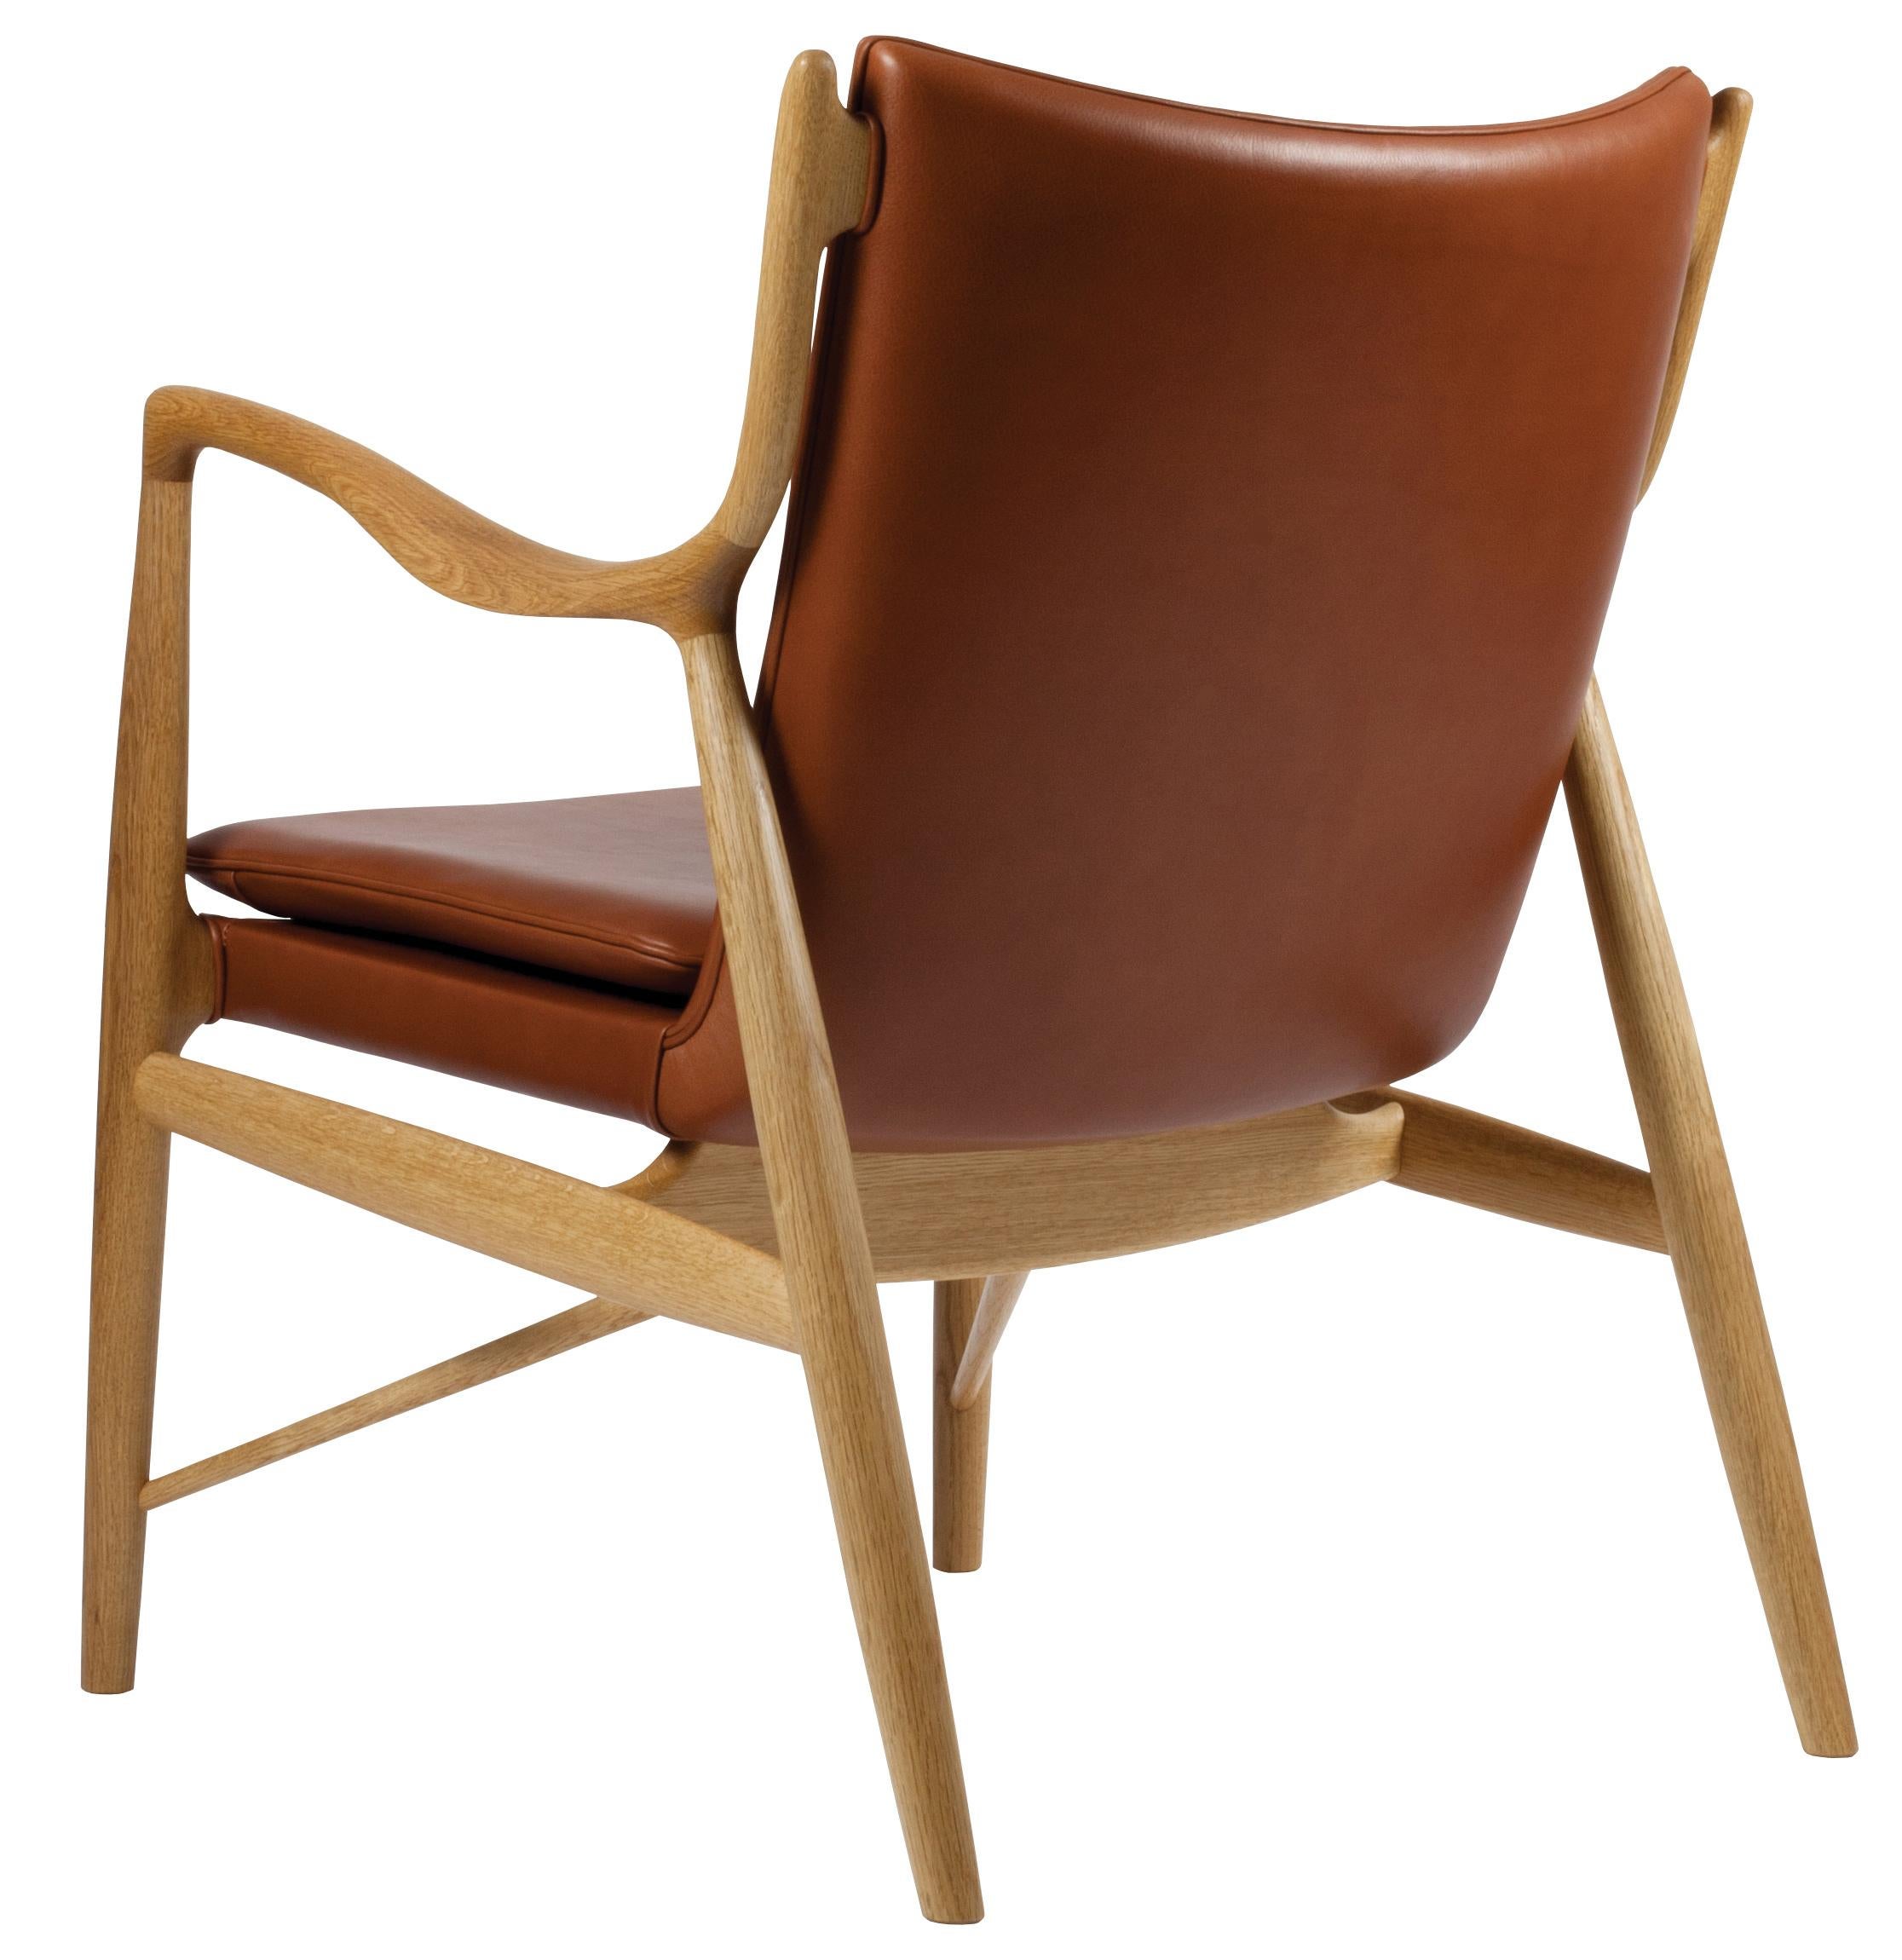 Modern Finn Juhl 45 Chair, Wood and Leather by House of Finn Juhl